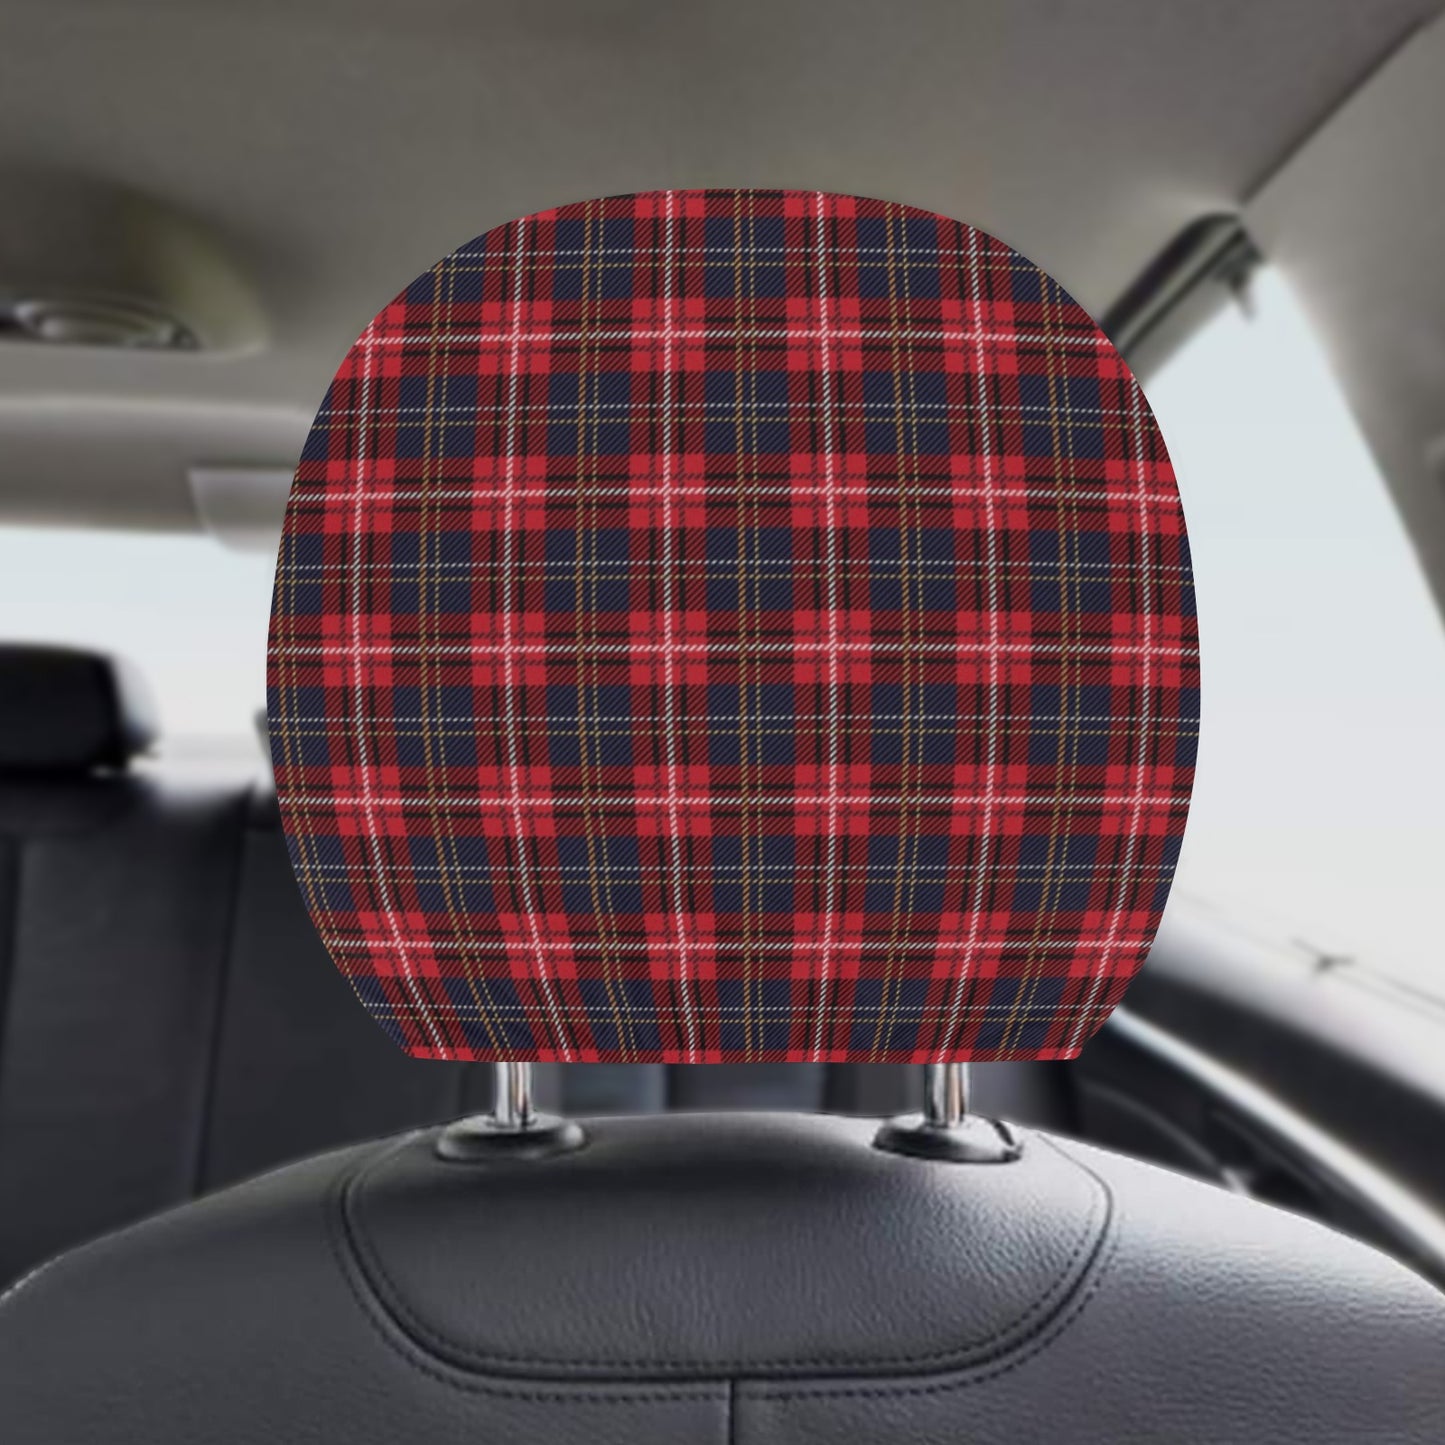 Red Buffalo Plaid Car Seat Headrest Cover (2pcs), Check Tartan Print Truck Suv Van Vehicle Auto Decoration Protector New Car Gift